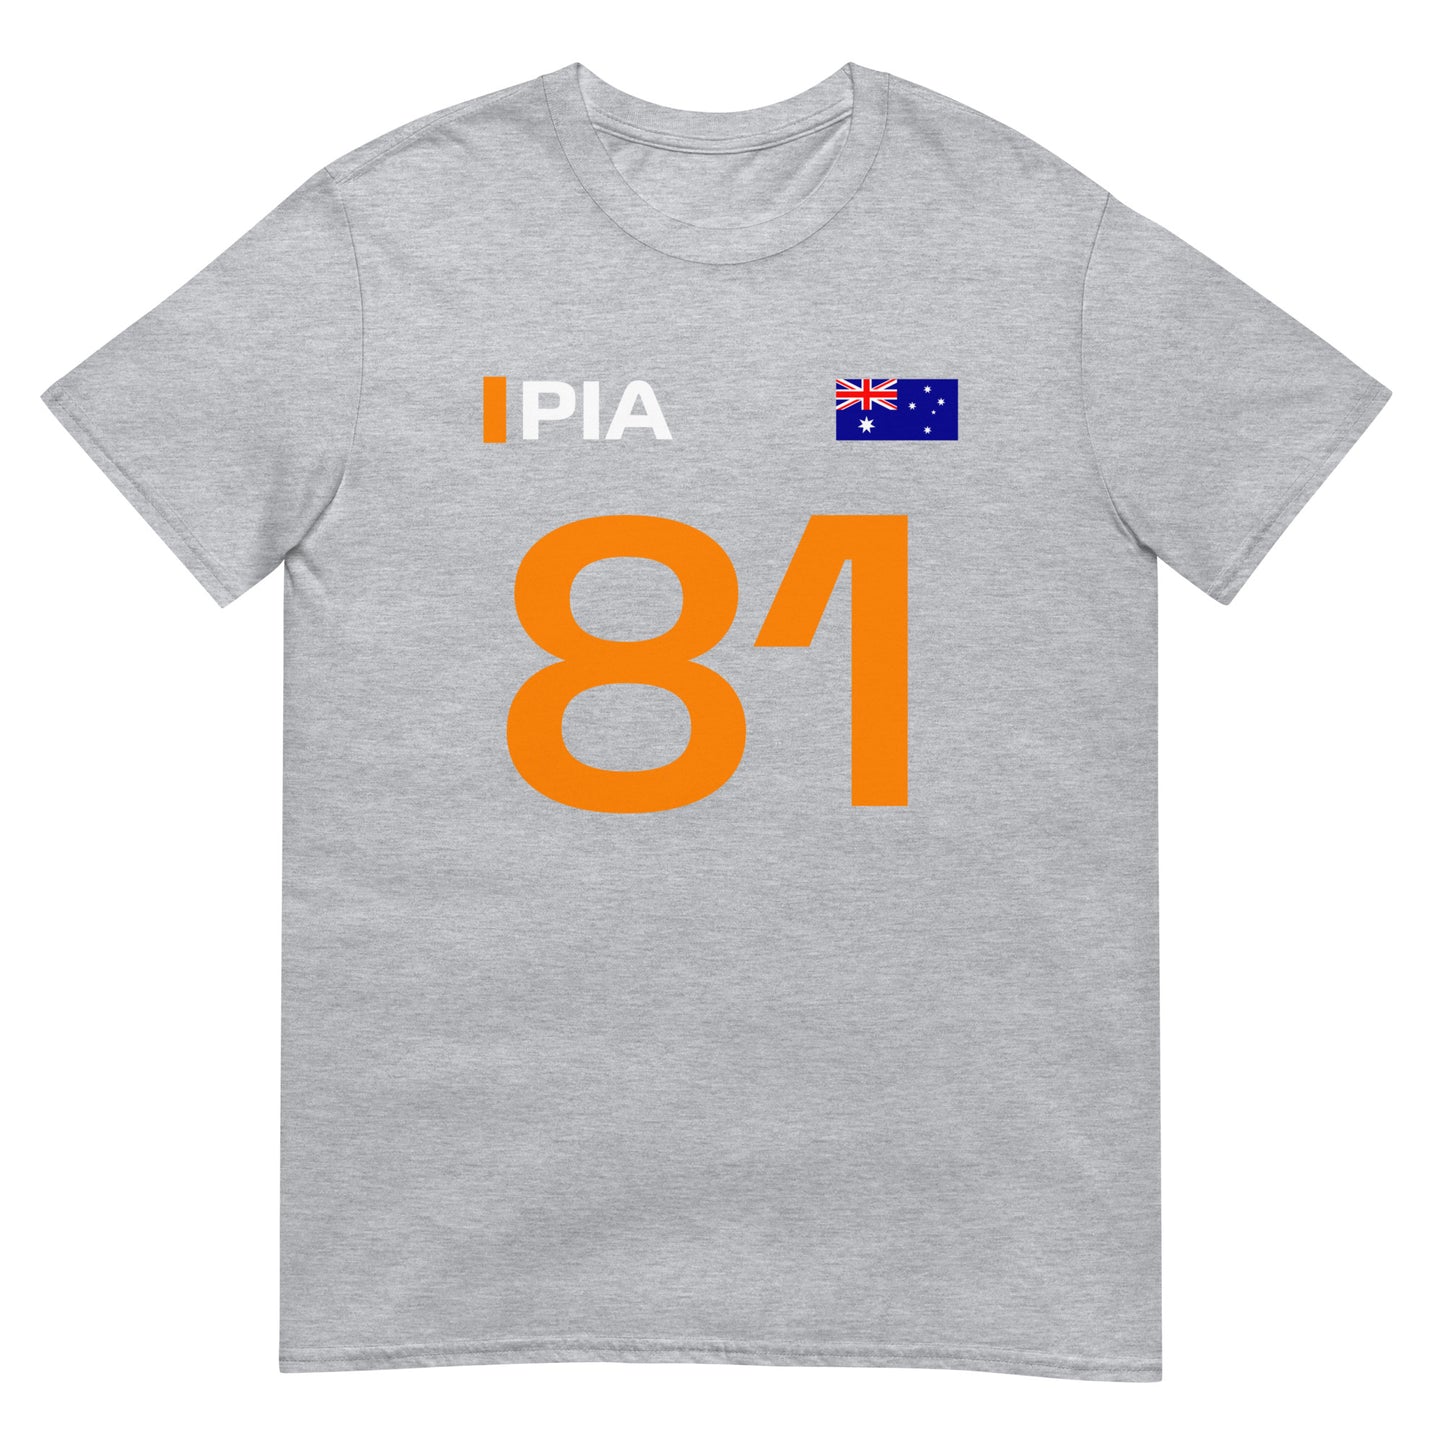 Oscar Piastri 81 McLaren Unisex T-Shirt sport grey